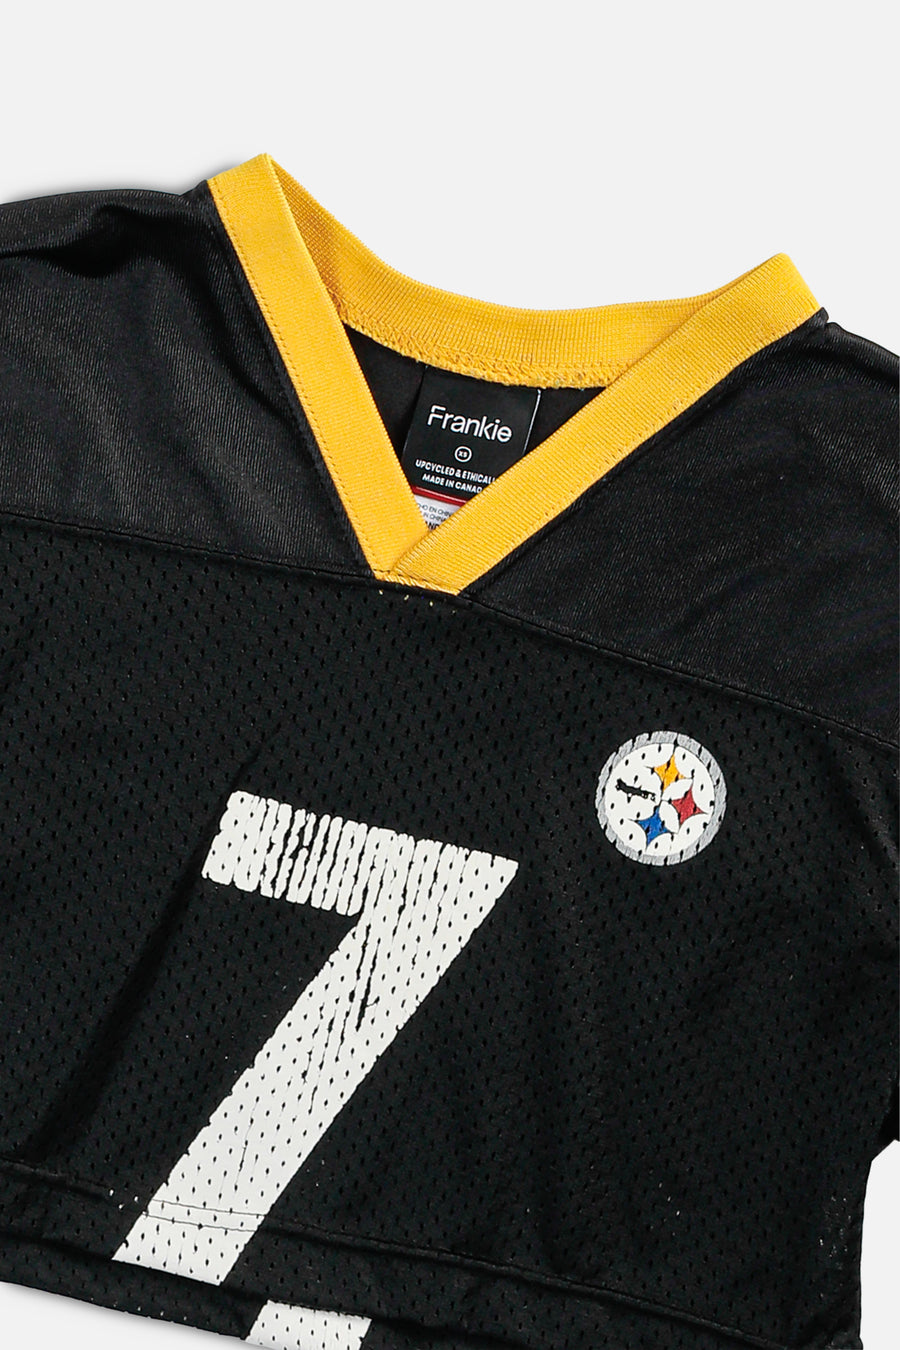 Rework Crop Pittsburgh Steelers NFL Jersey - XS